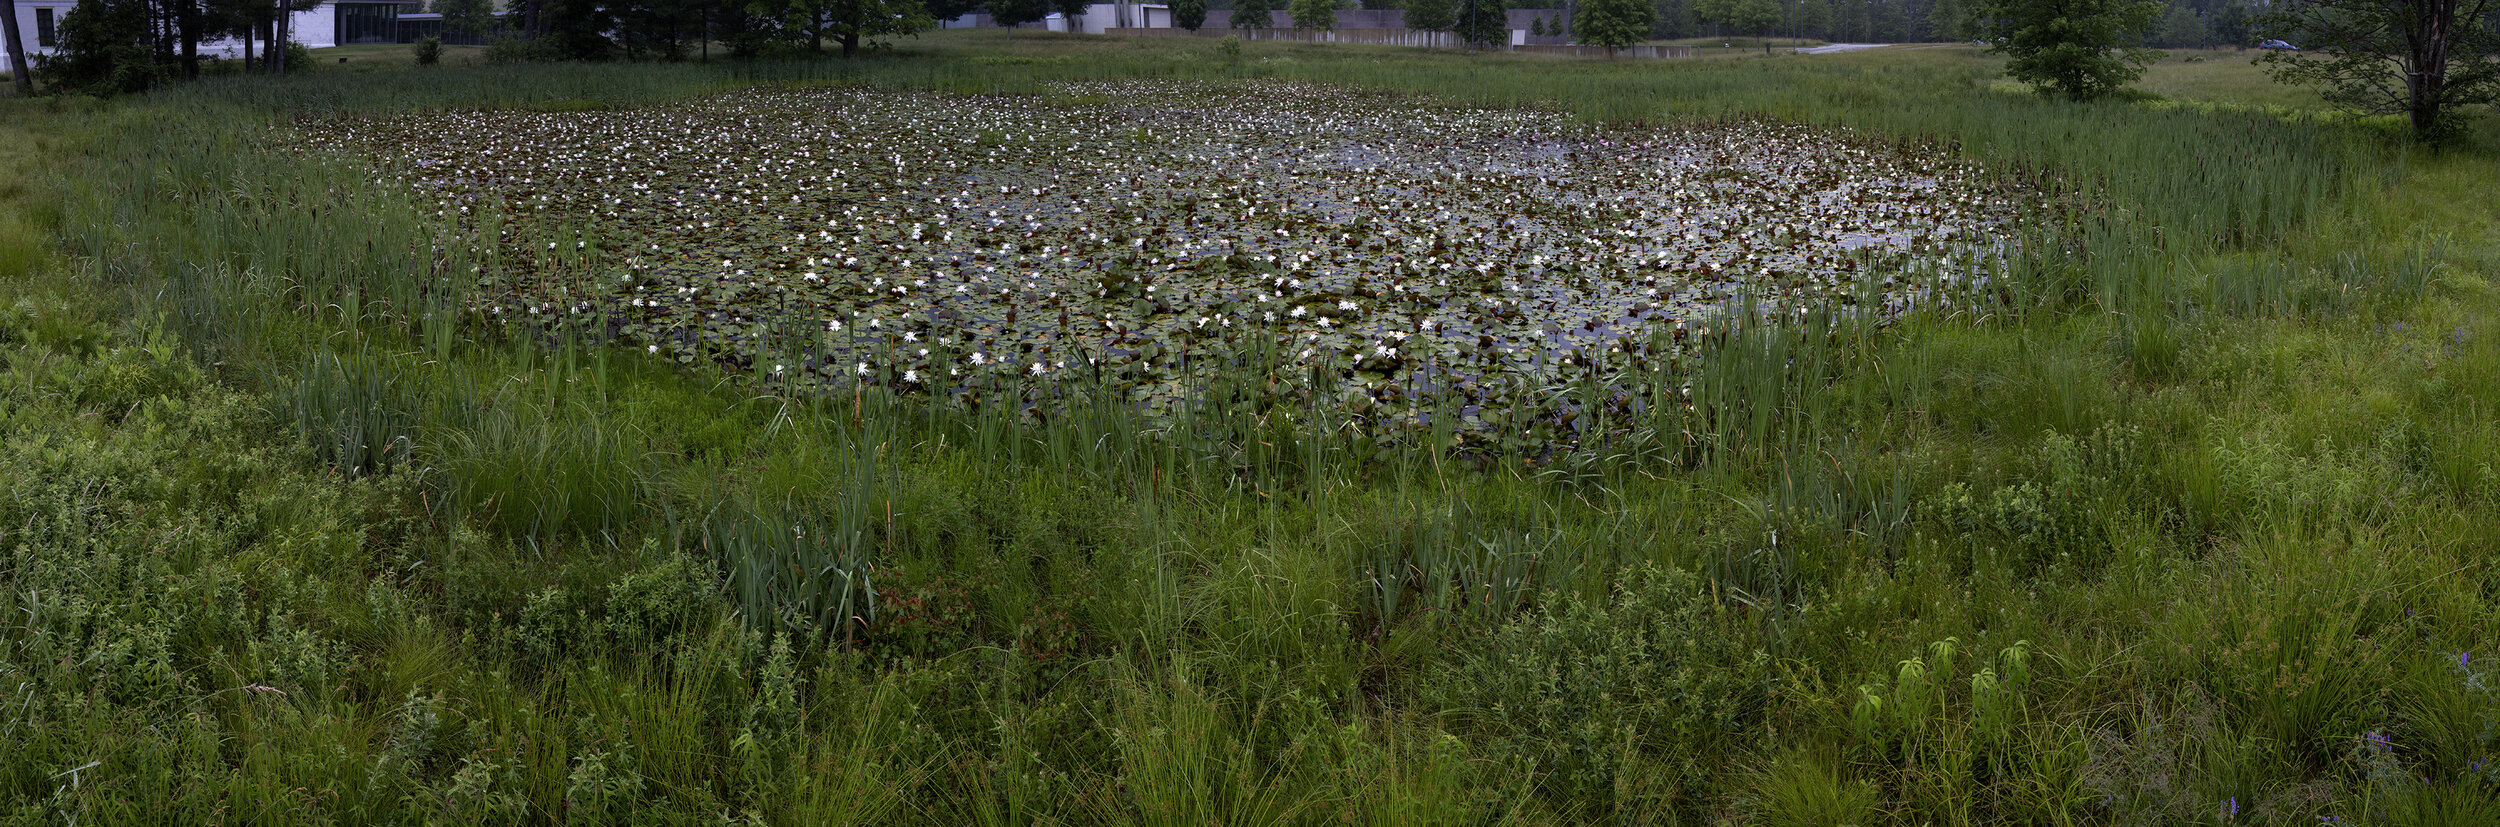 Stone Hill Lily Pond #8, Summer Rain